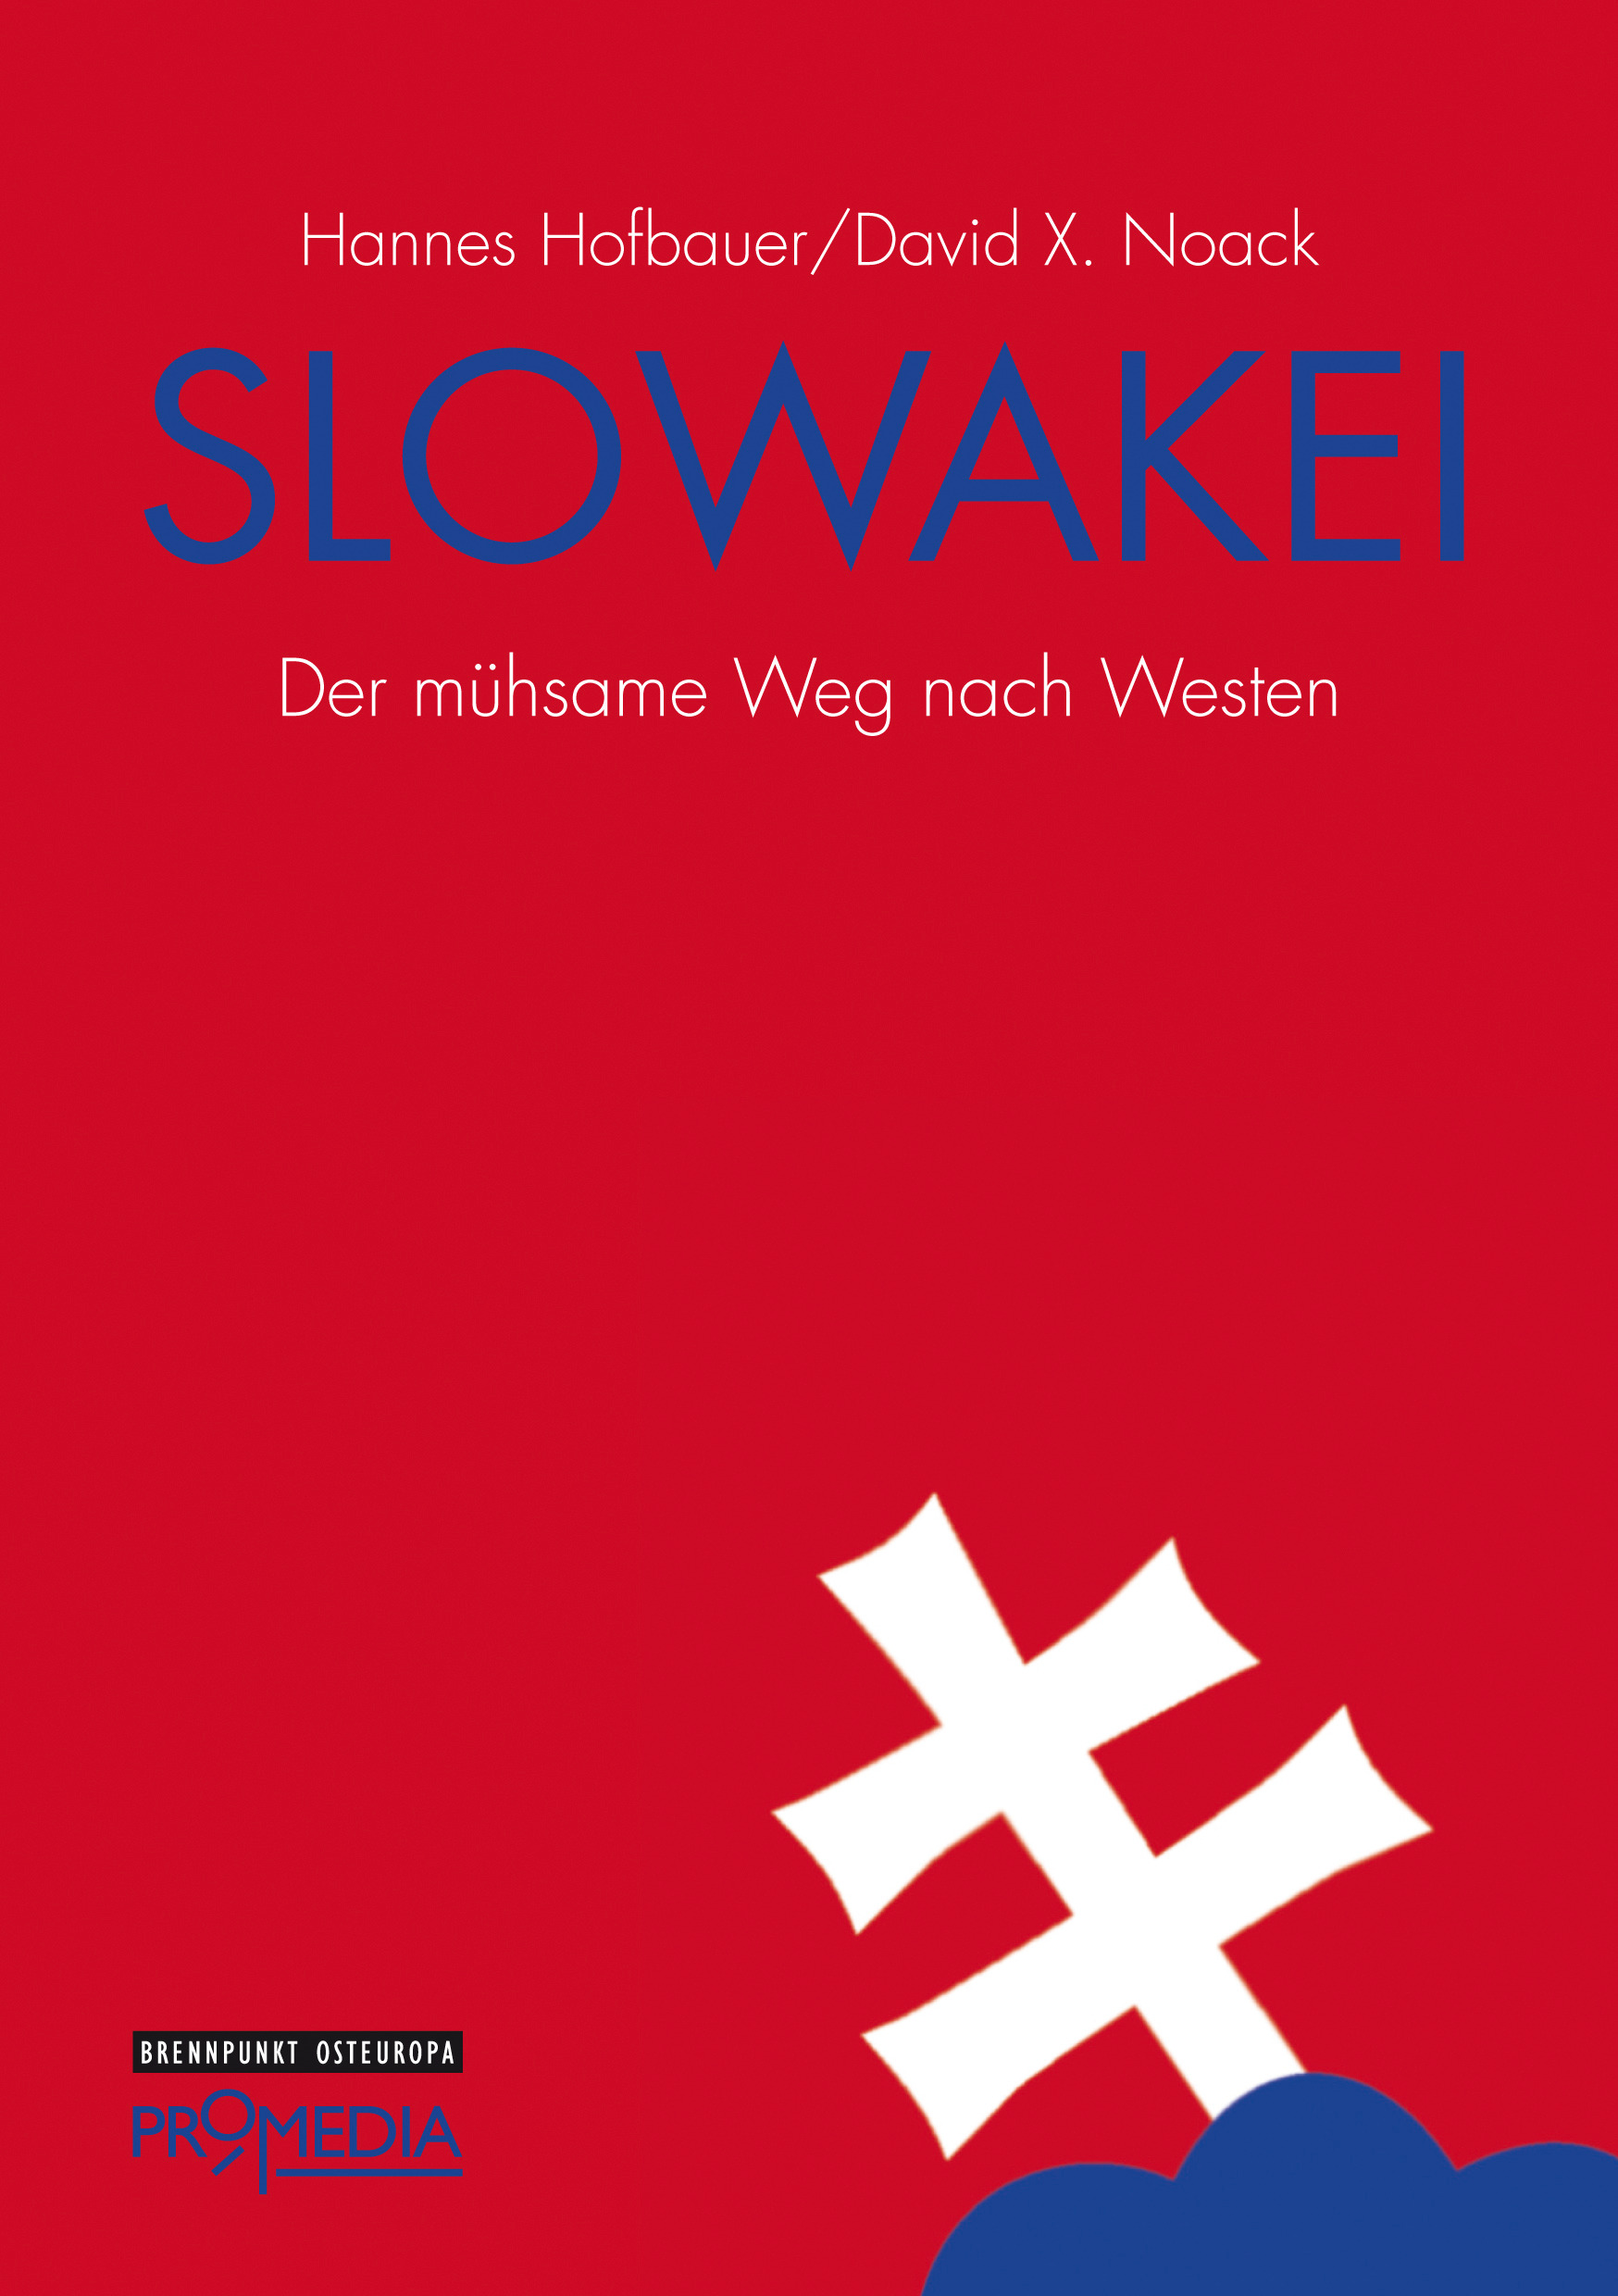 [Cover] Slowakei